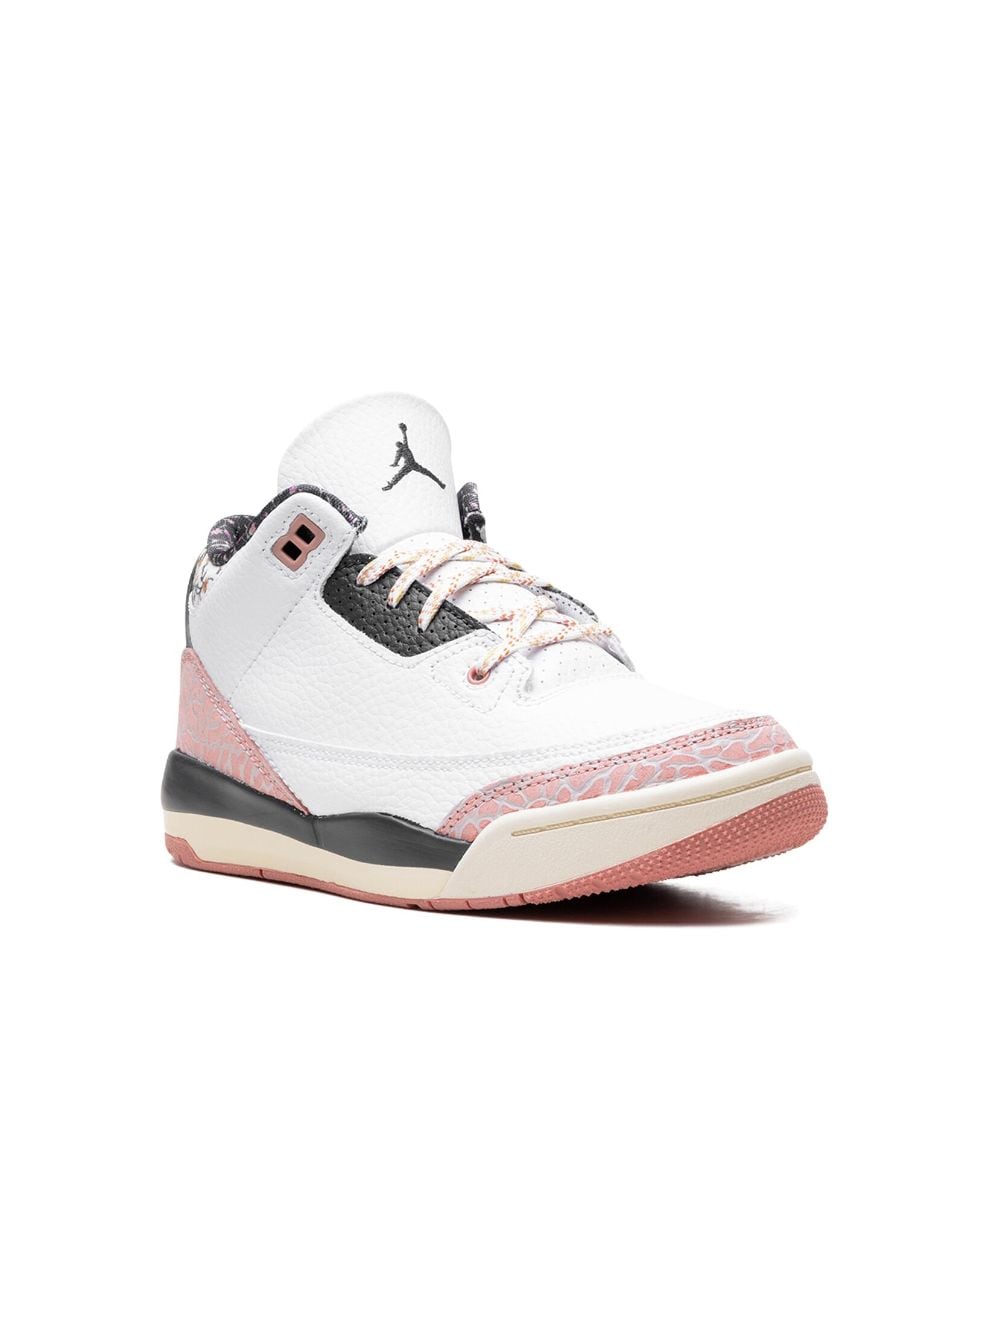 Image 1 of Jordan Kids Air Jordan 3 "White/Red Stardust" sneakers